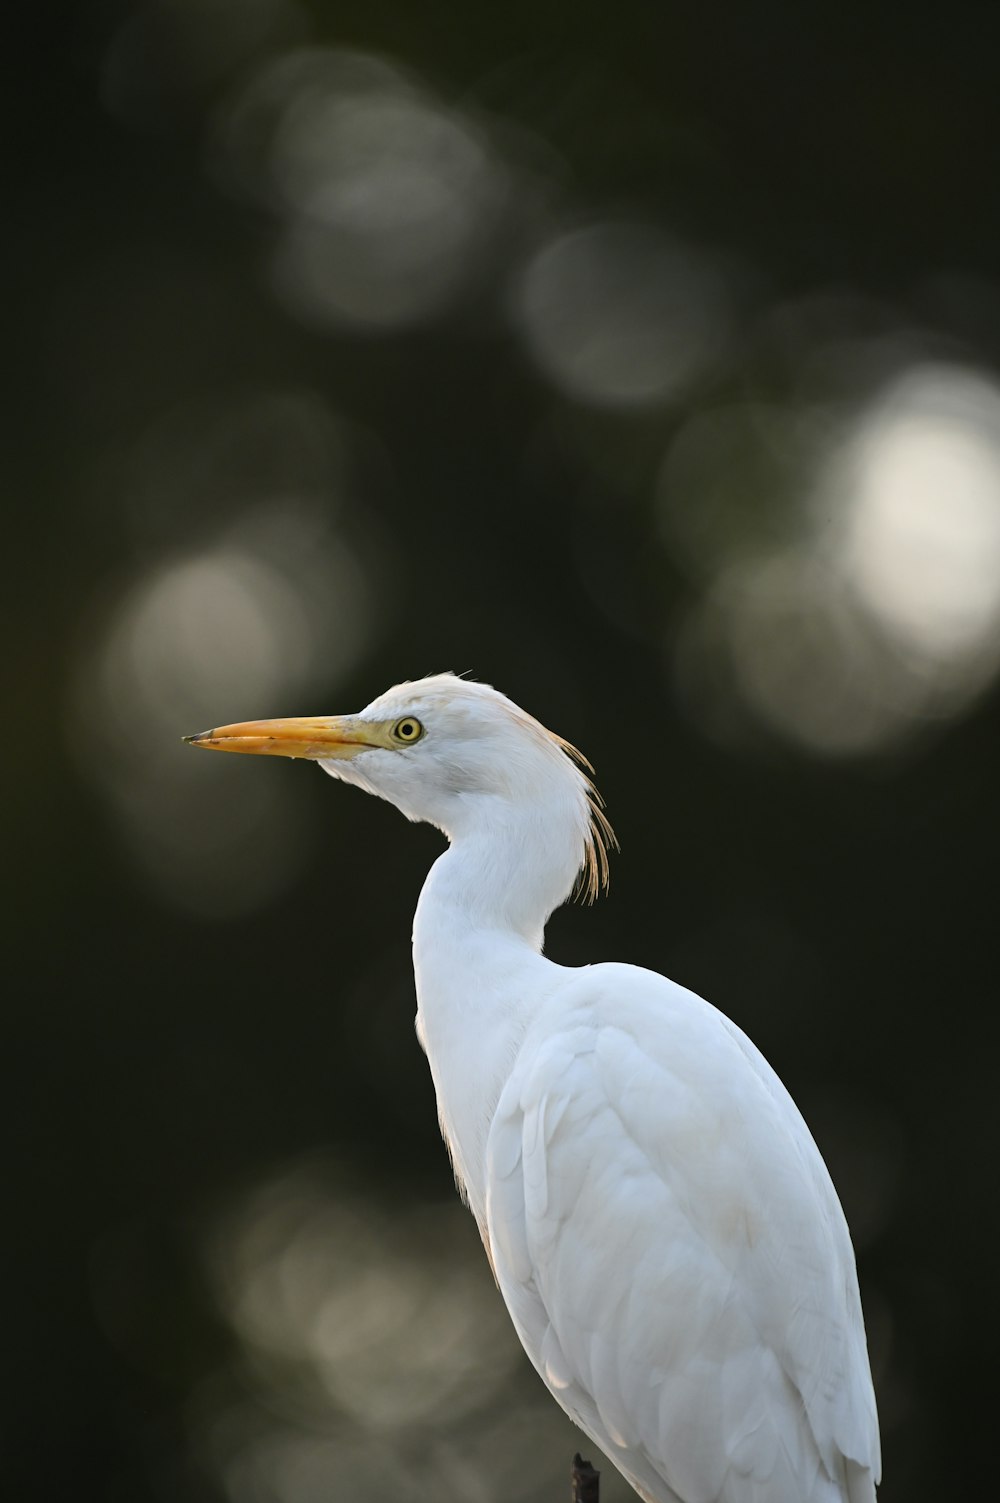 a white bird with a long yellow beak